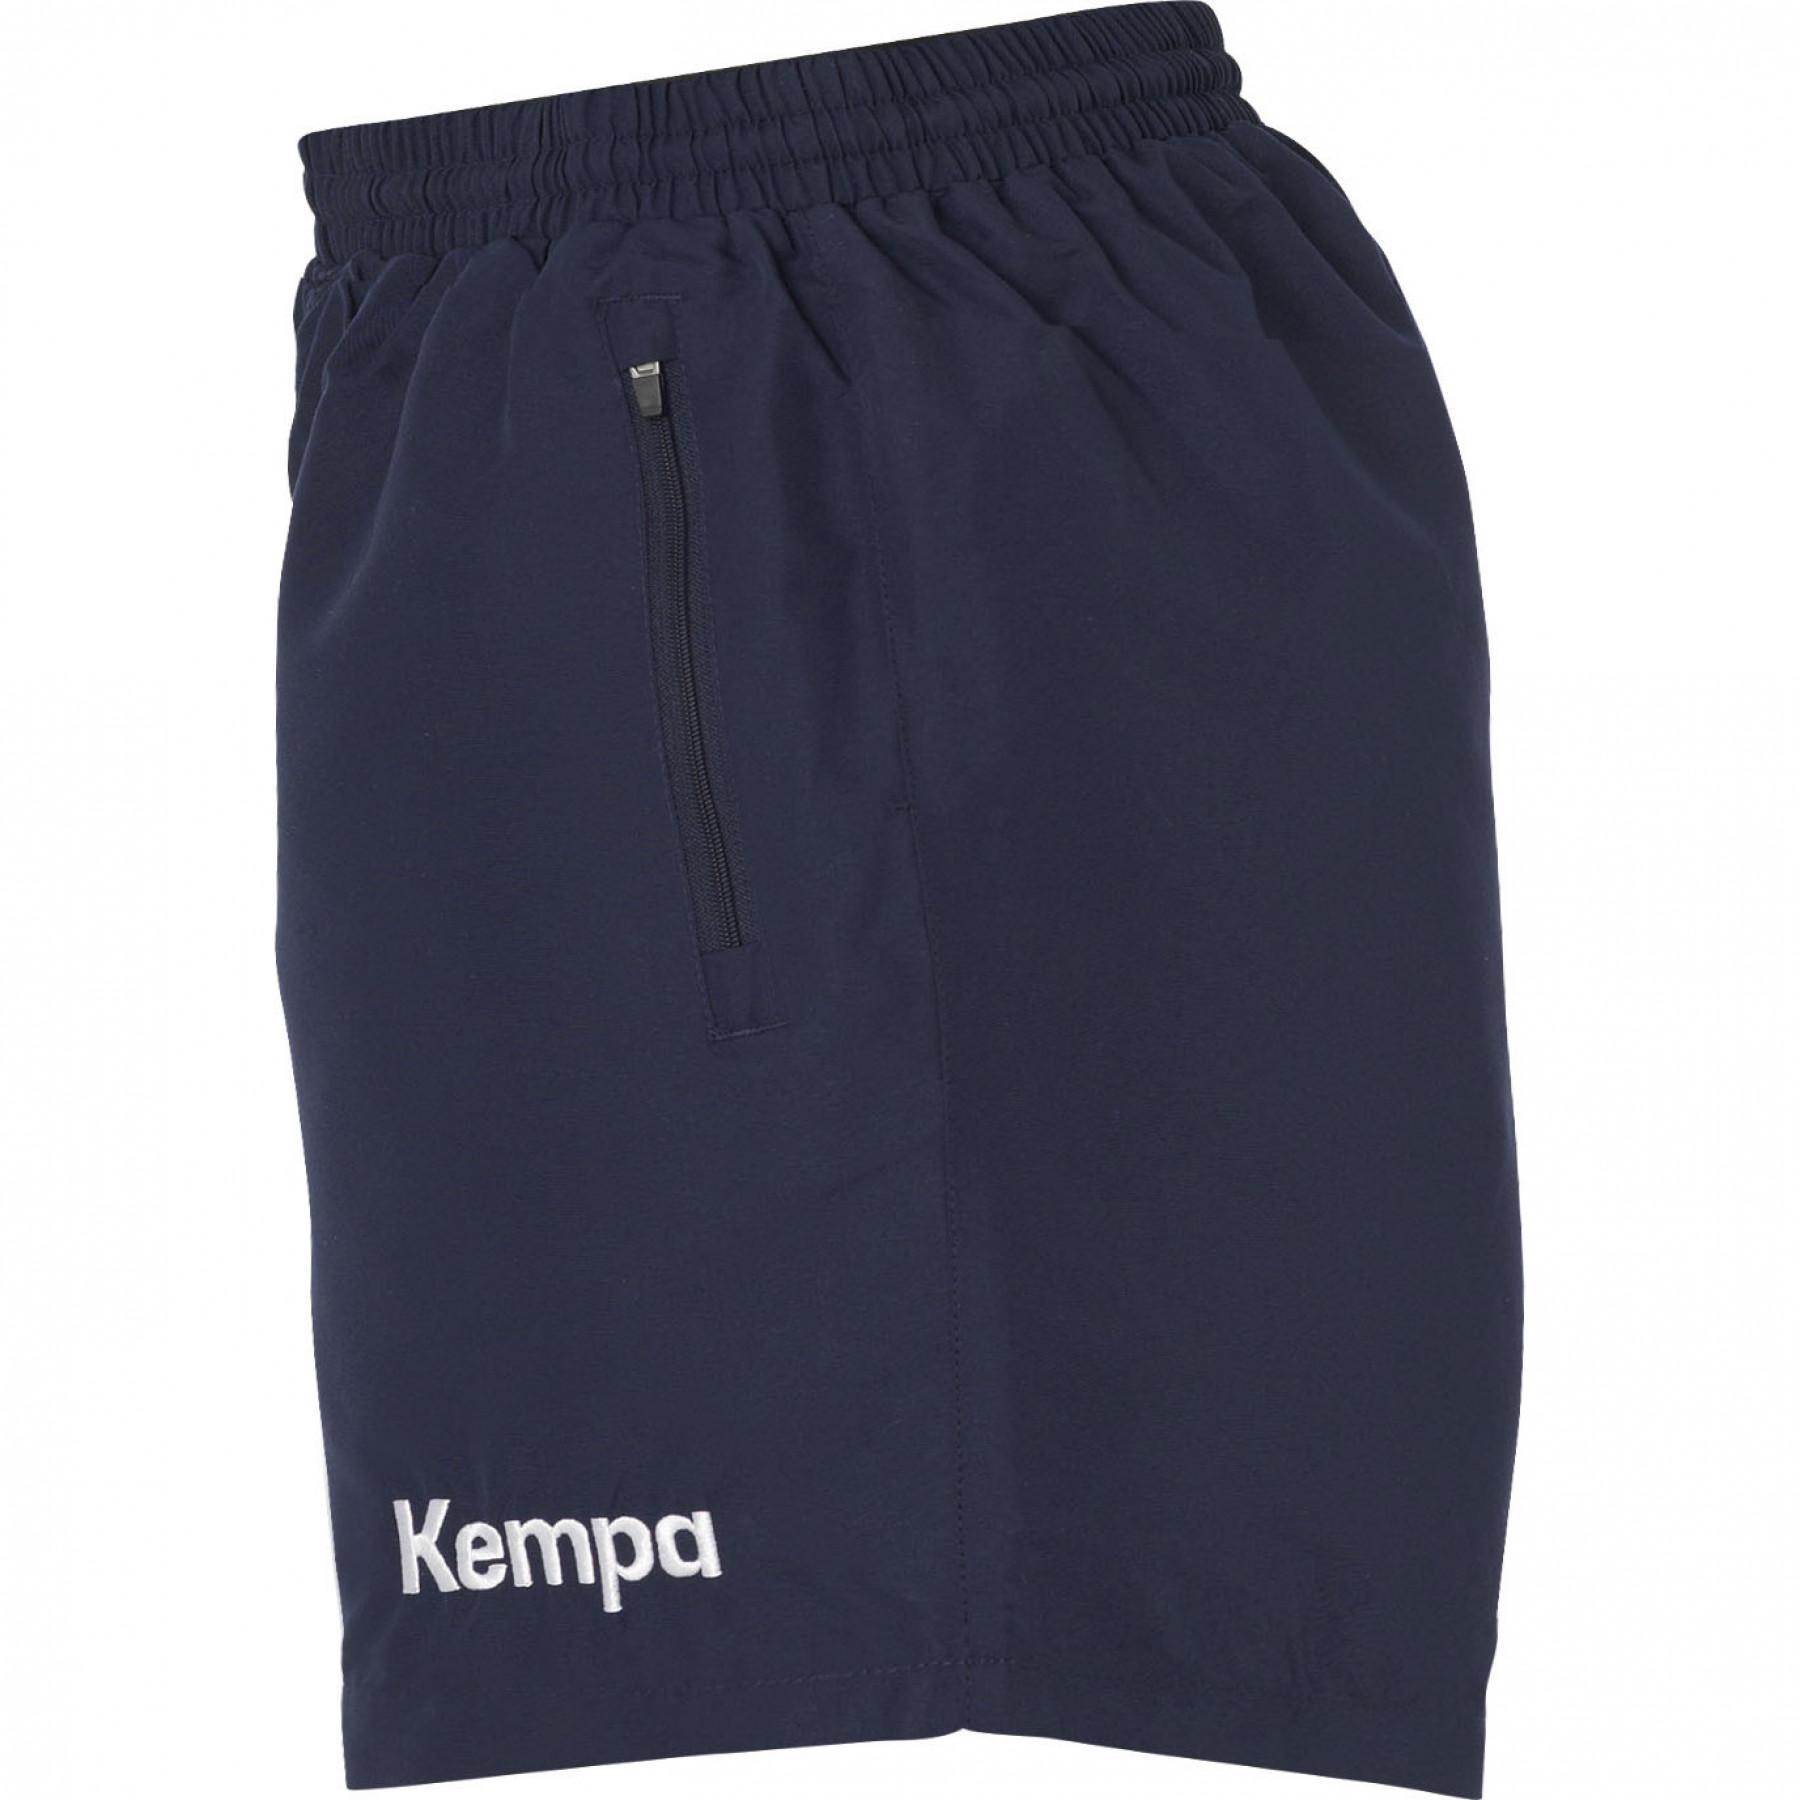 Damen-Shorts Kempa Woven